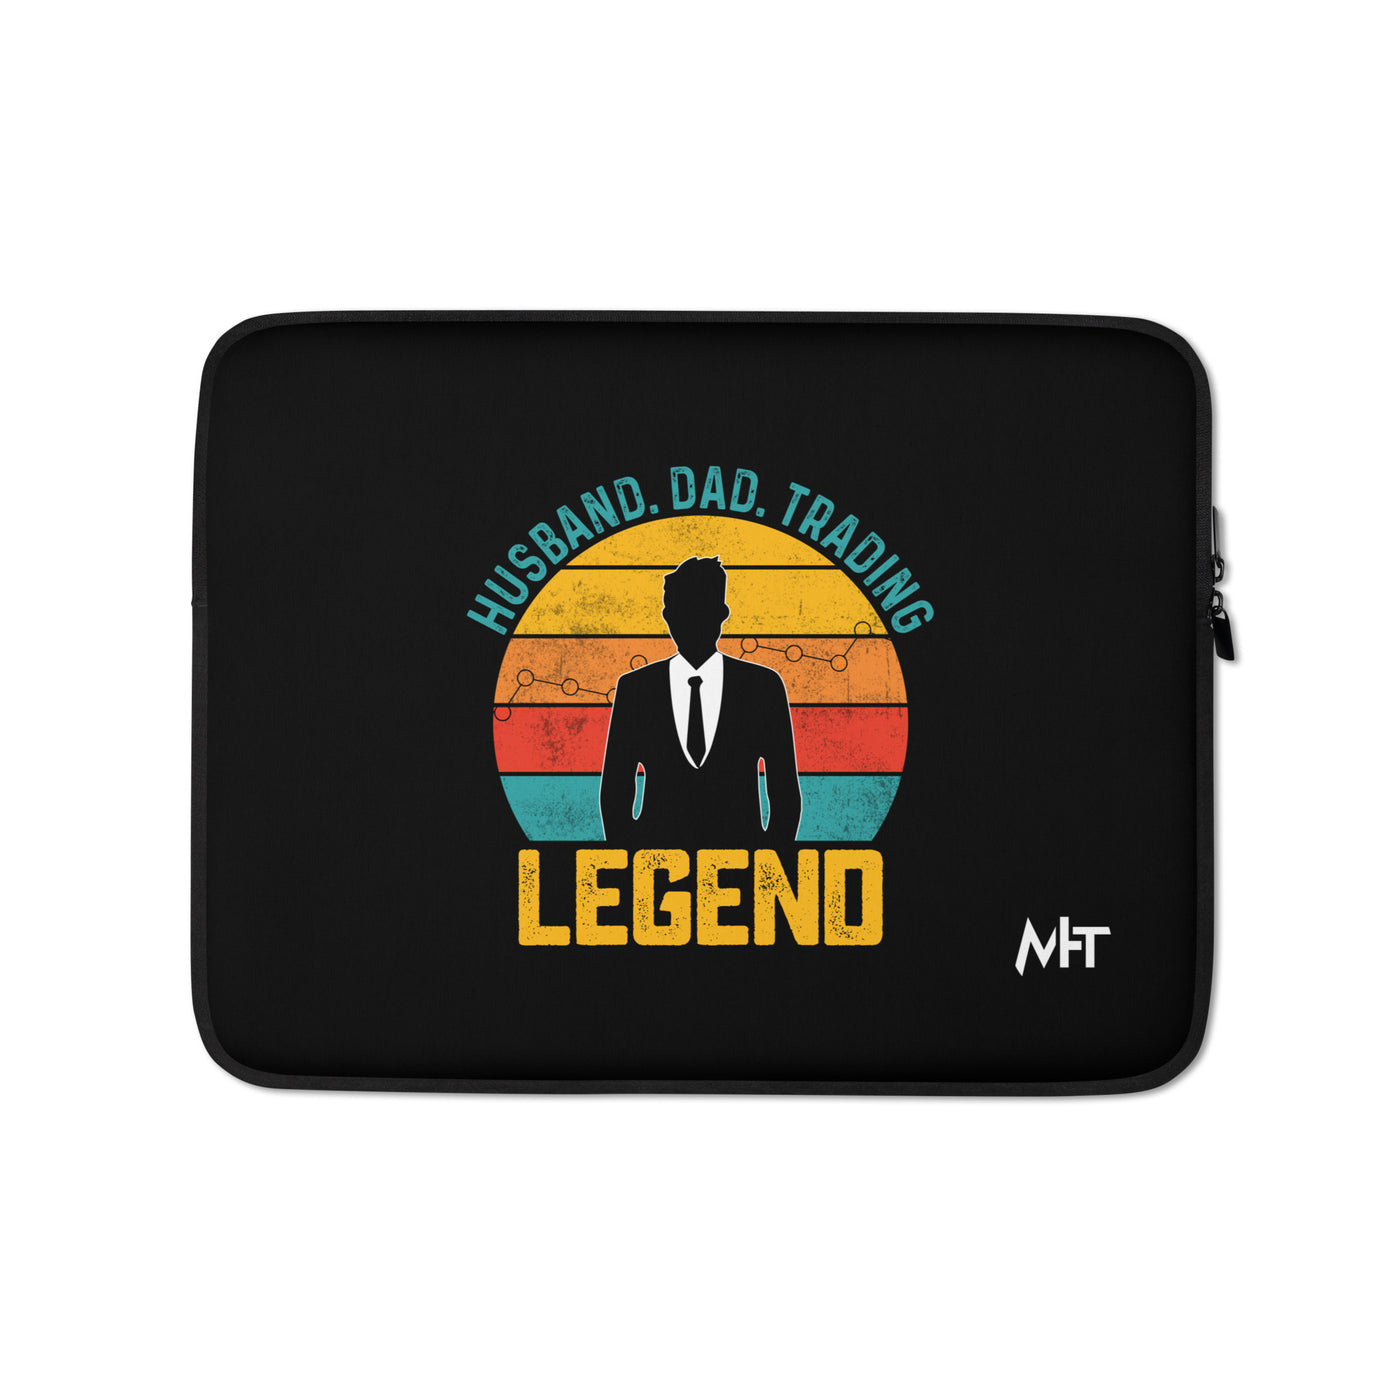 Husband.Dad.Trading Legend - Laptop Sleeve